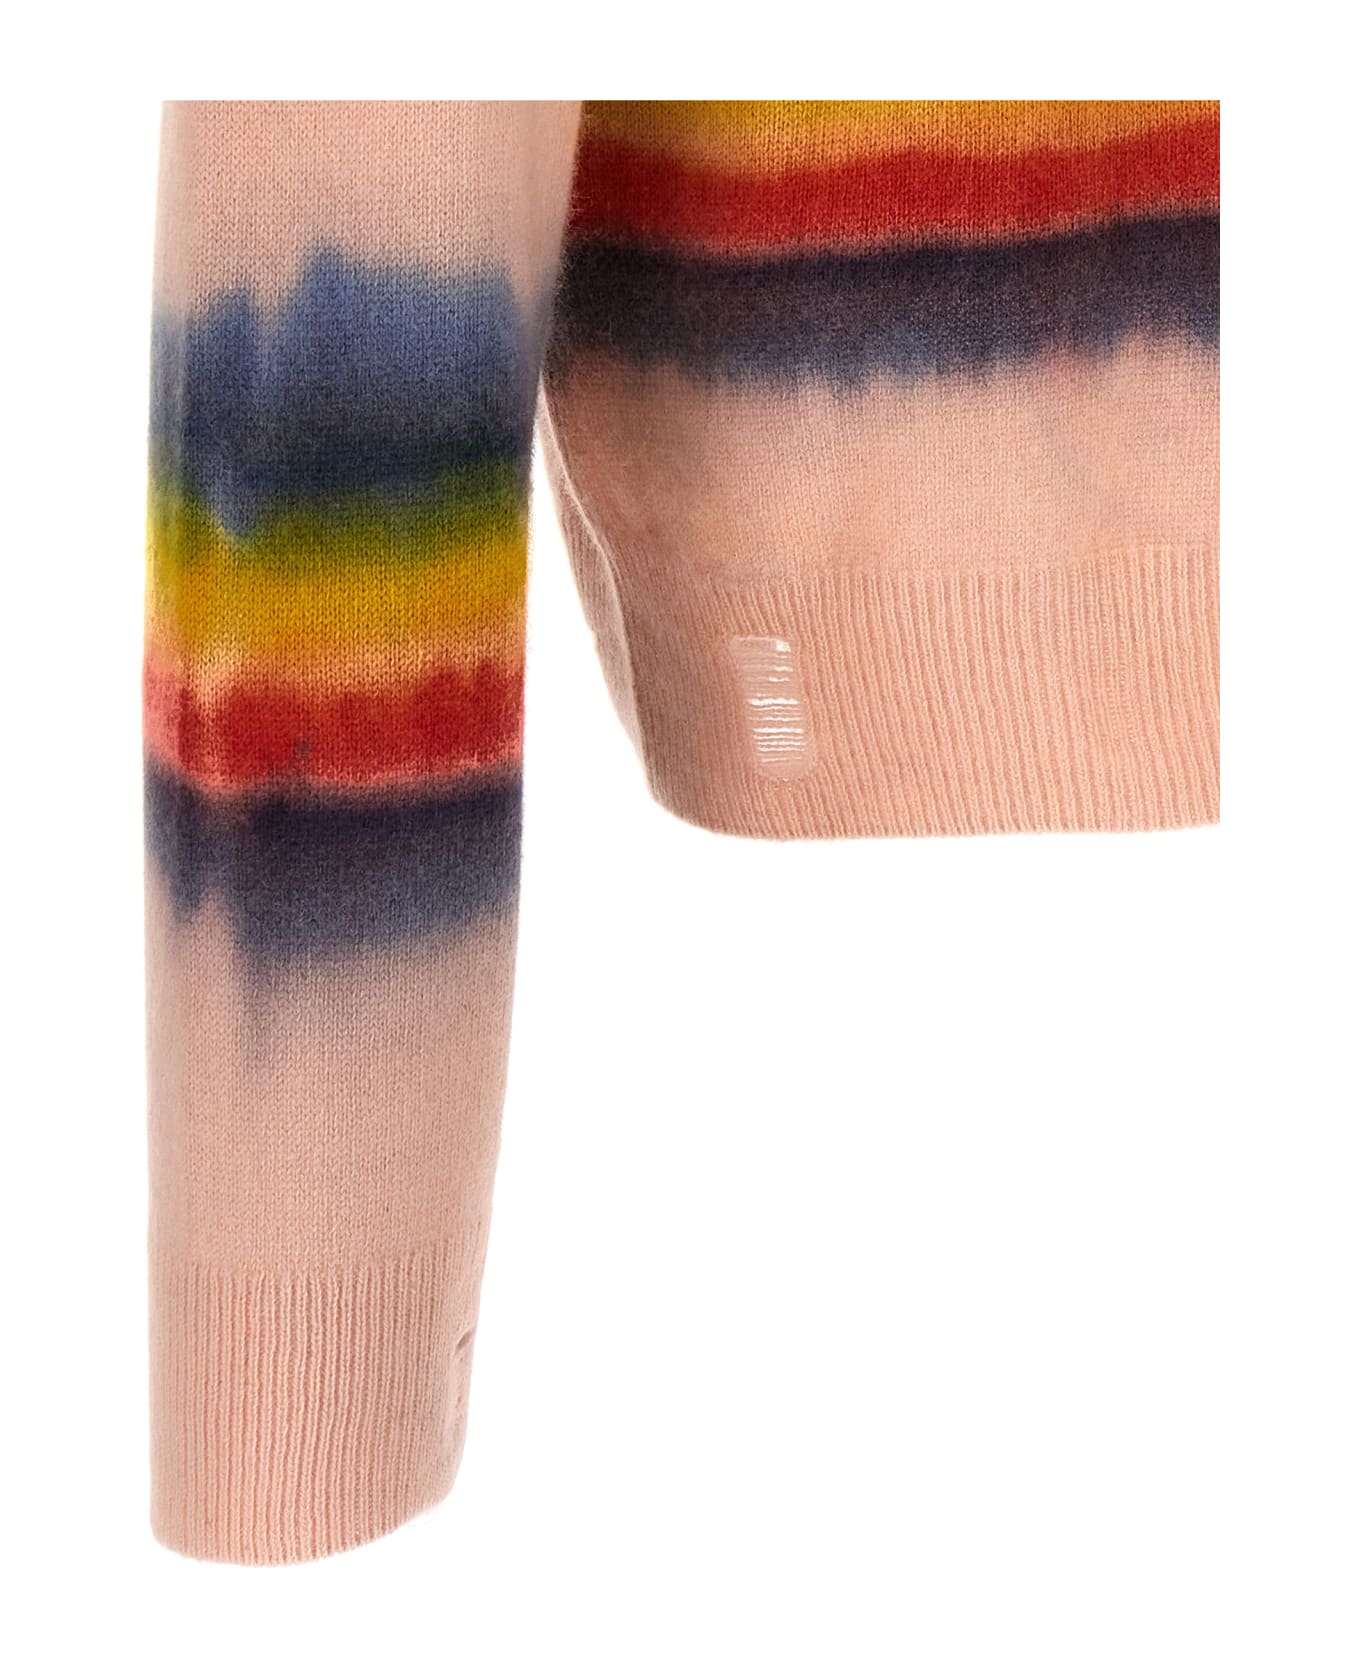 AMIRI 'rainbow Tie Dye' Sweater - Multicolor